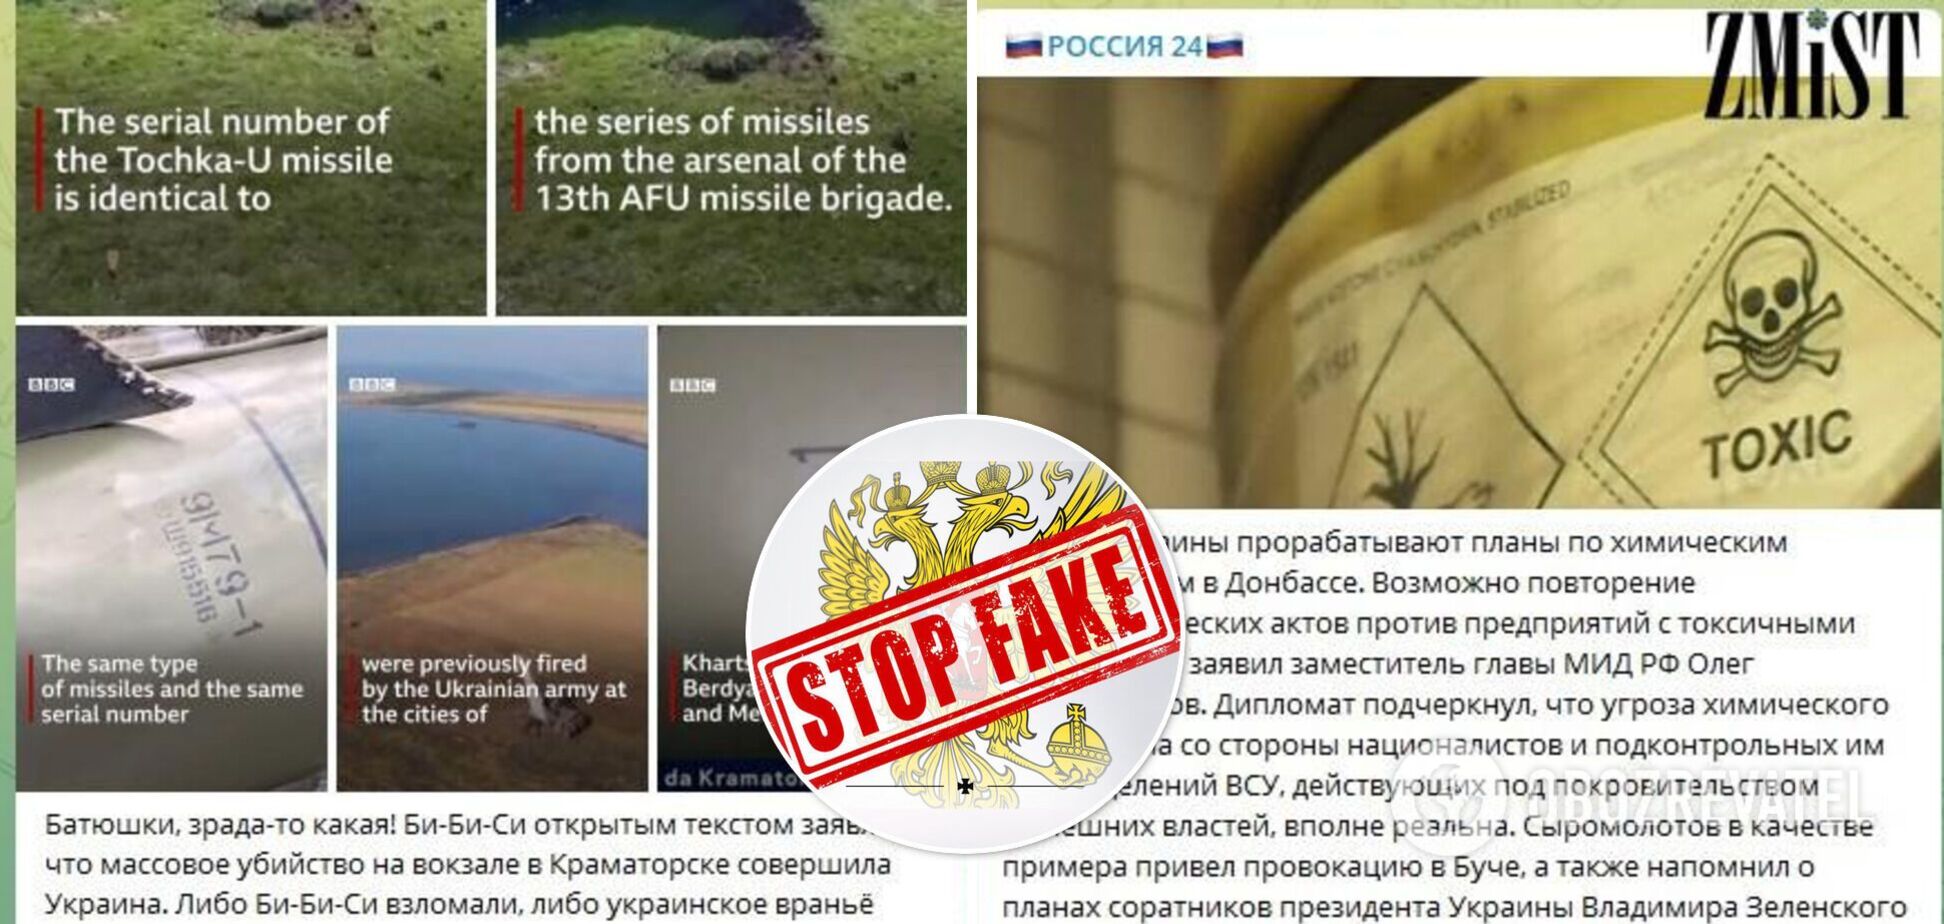 Україна обстріляла Краматорськ та планує хімічні атаки на Донбасі: російські фейки за 13 квітня